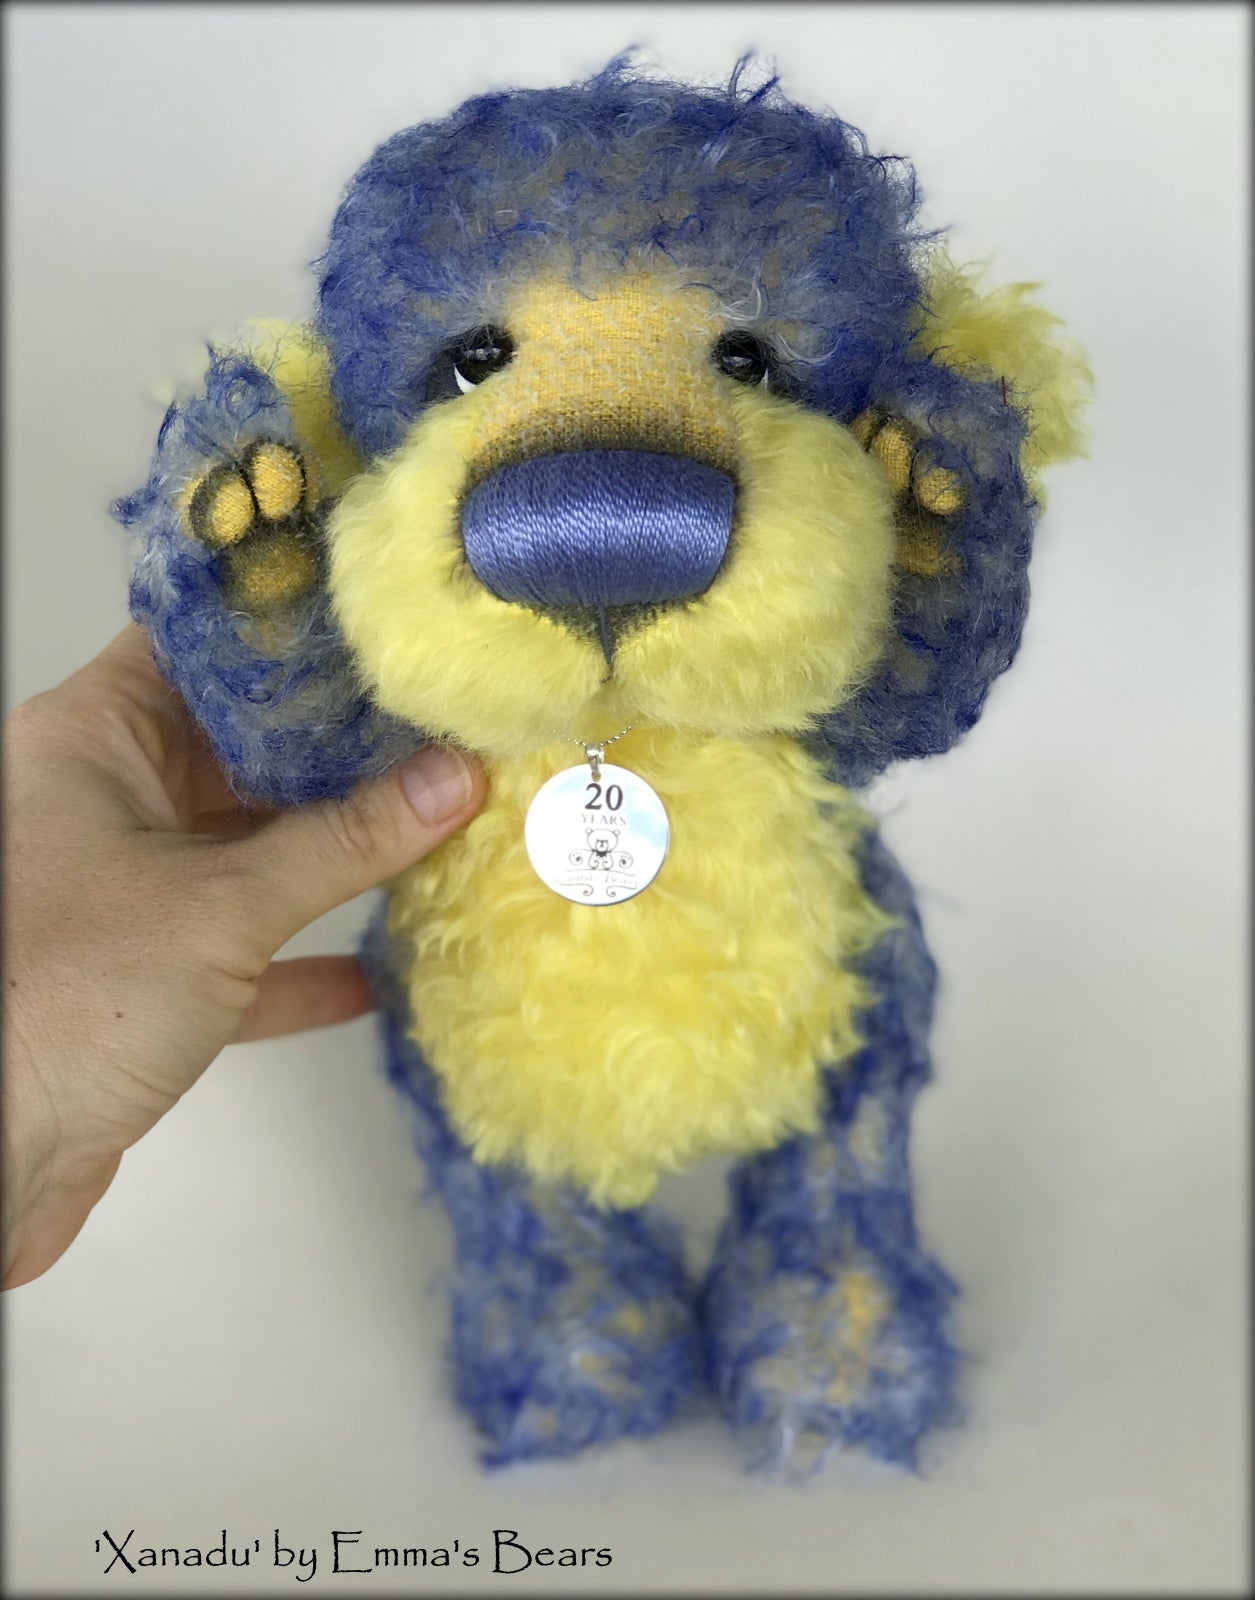 Xanadu - 20 Years of Emma's Bears Commemorative Teddy - OOAK in a series